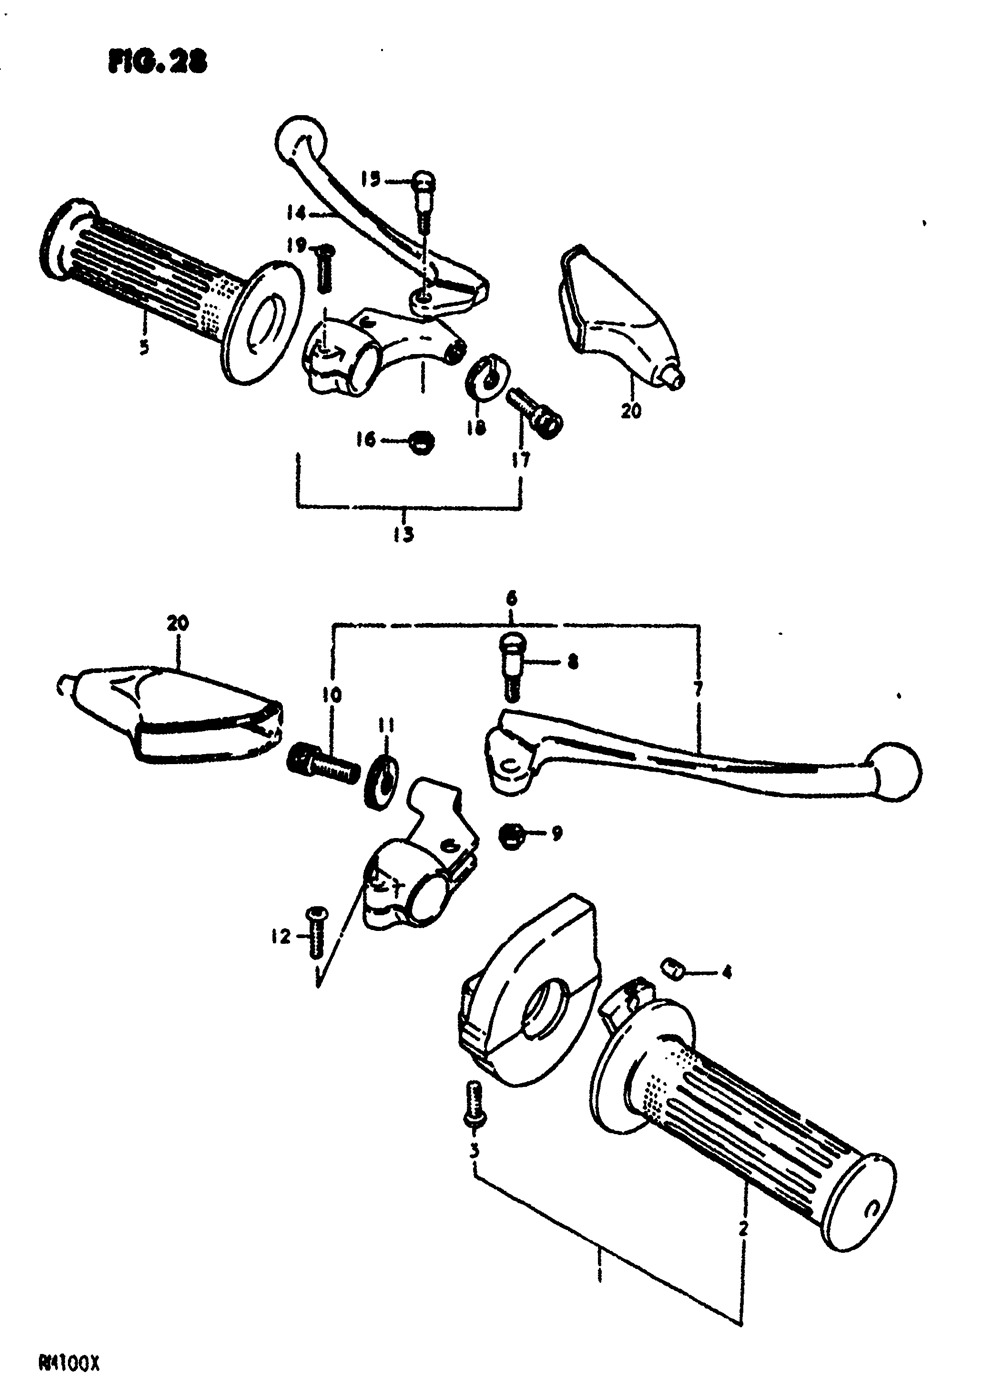 Handle grip - lever (rm100n)